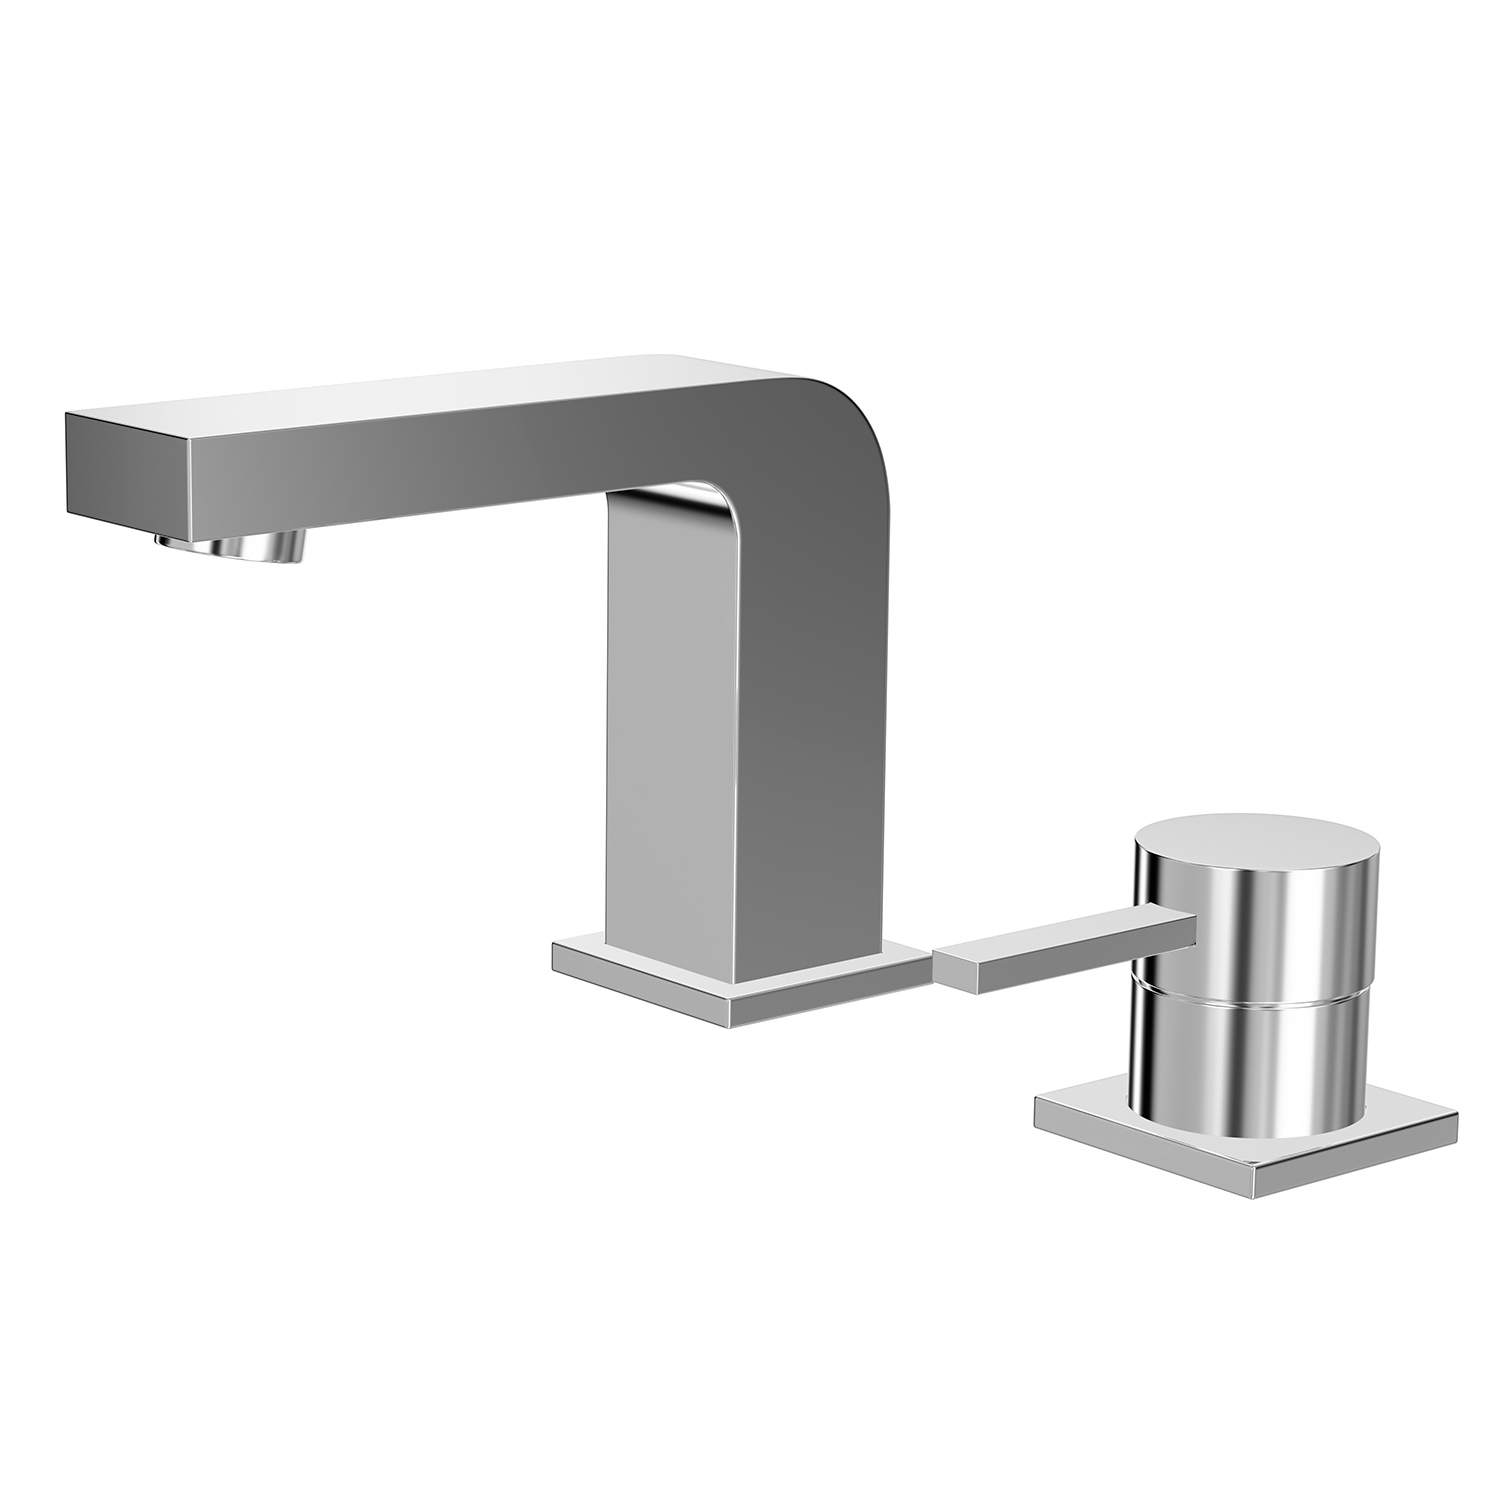 DAX Single Handle Bathroom Faucet, Brass Body, Chrome Finish, 7-1/2 x 5-1/2 Inches (DAX-8127)